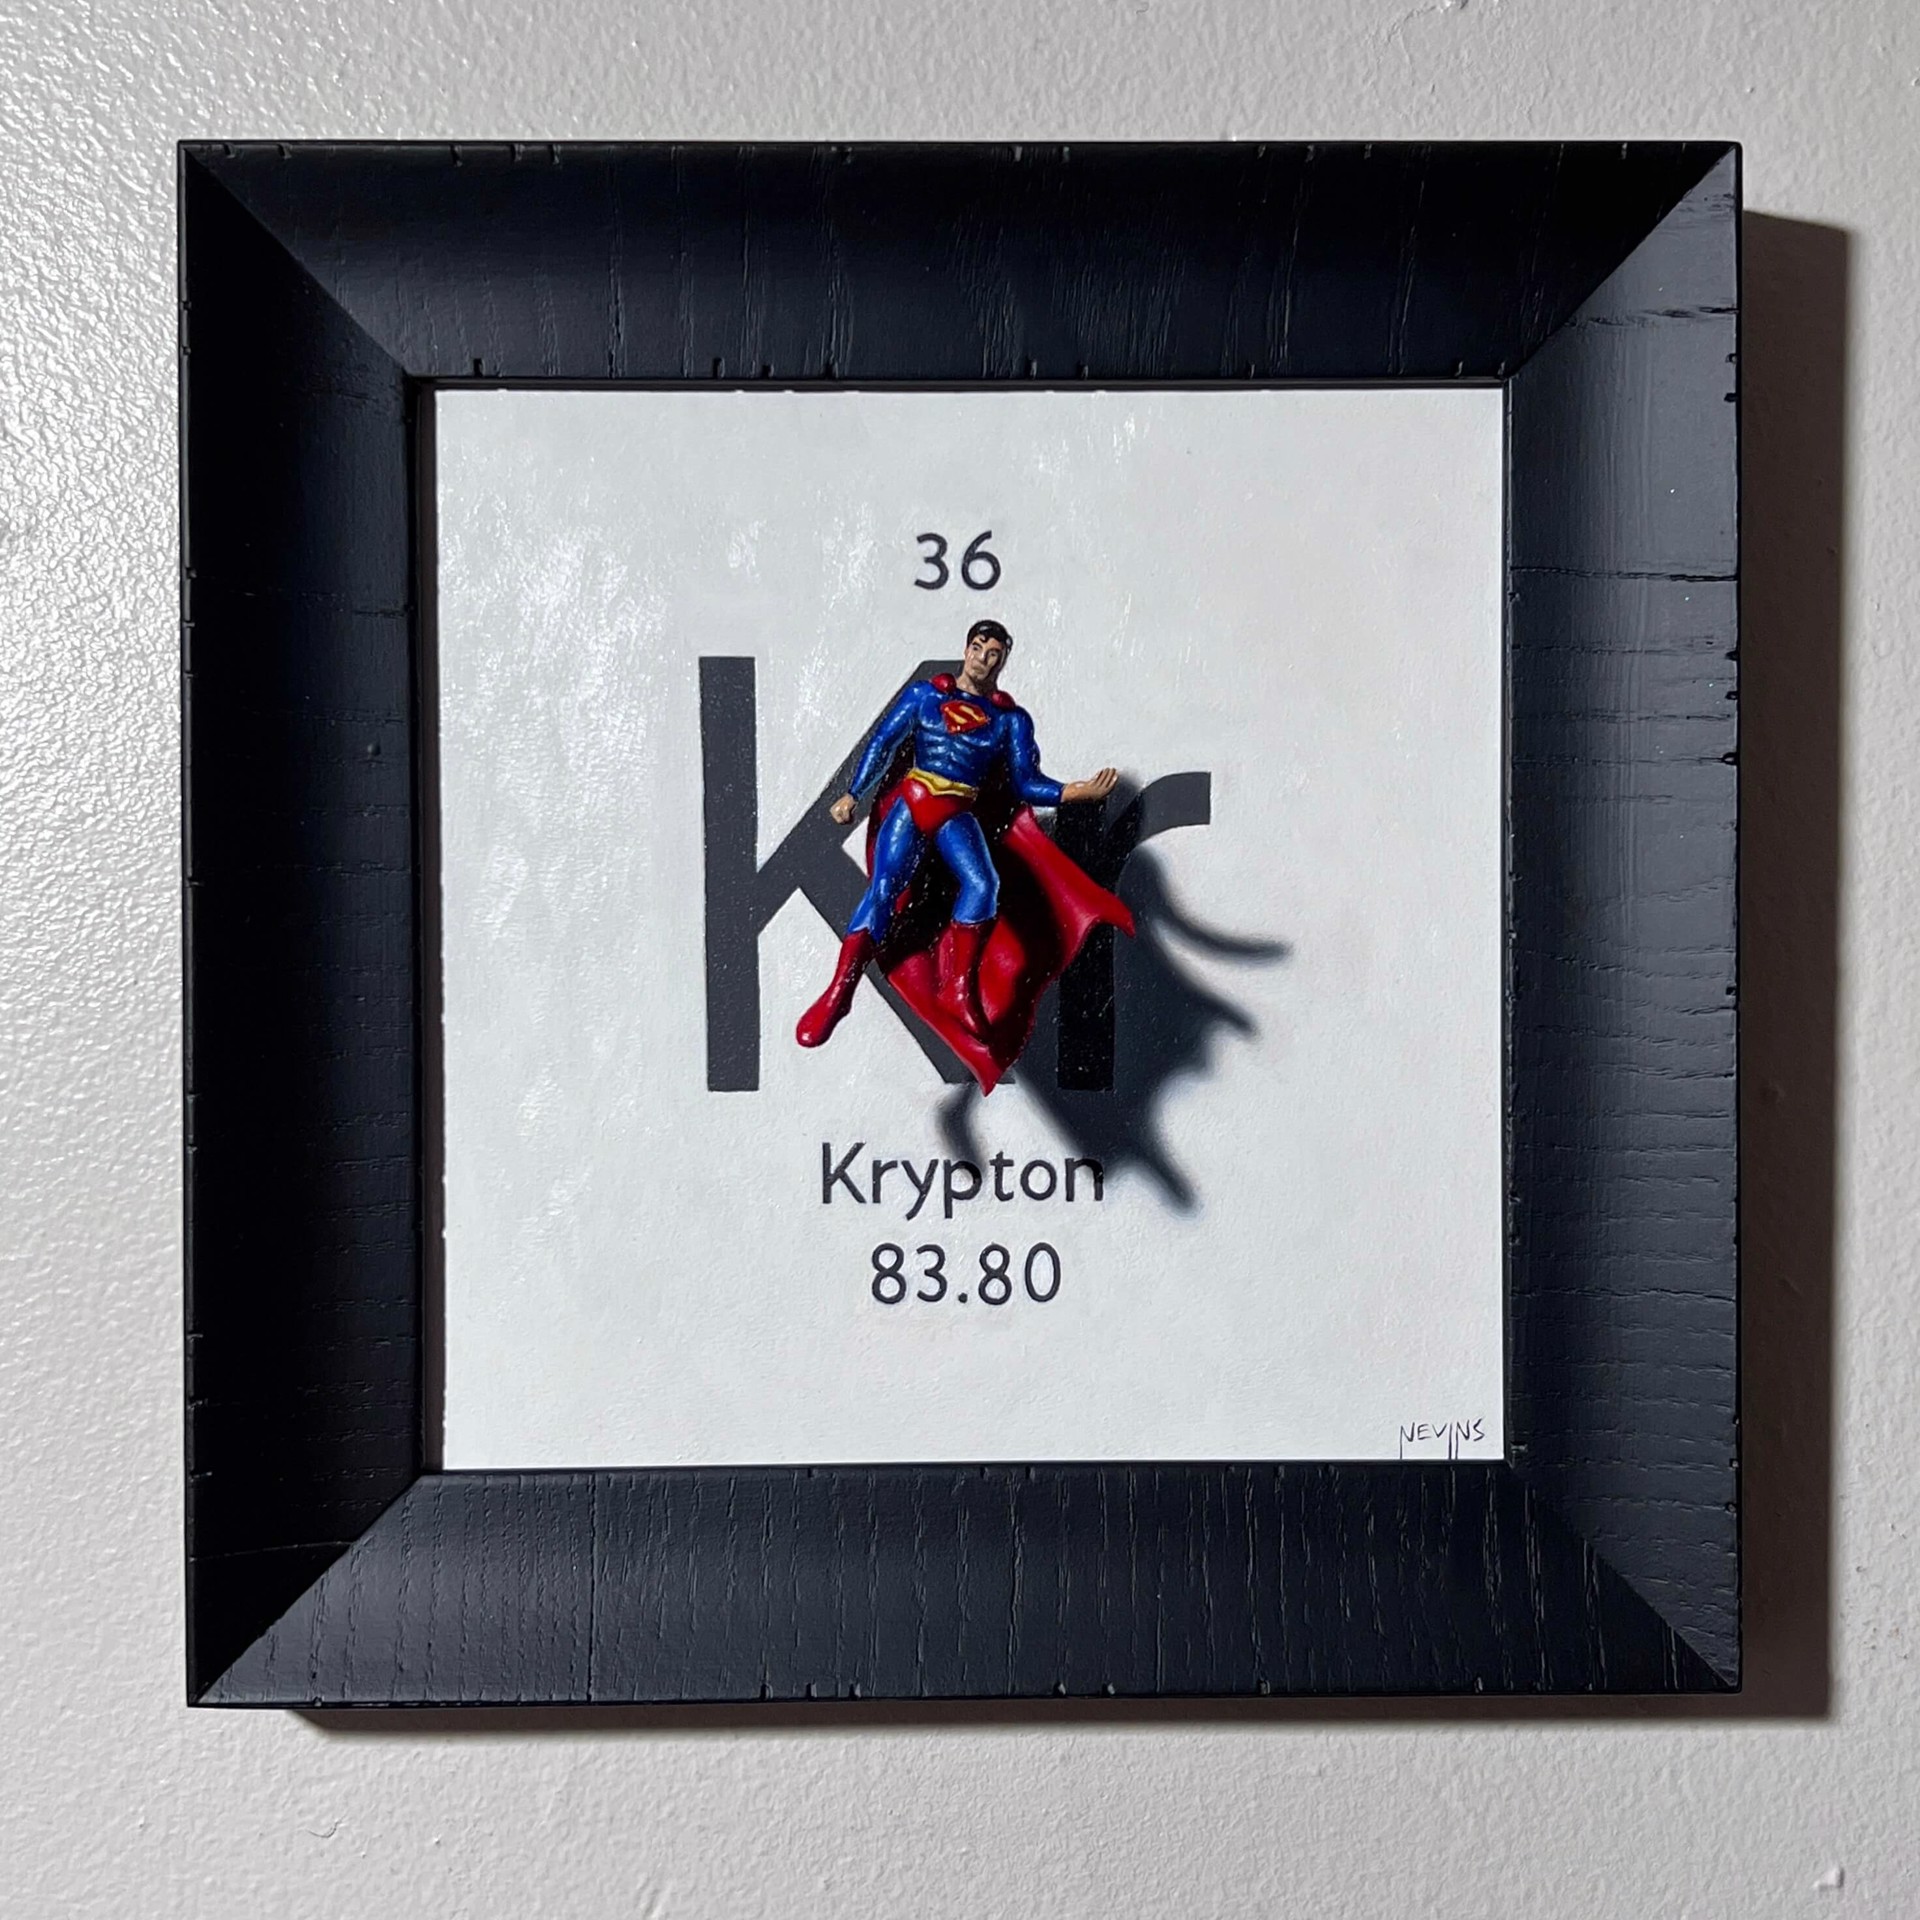 Krypton by Patrick Nevins